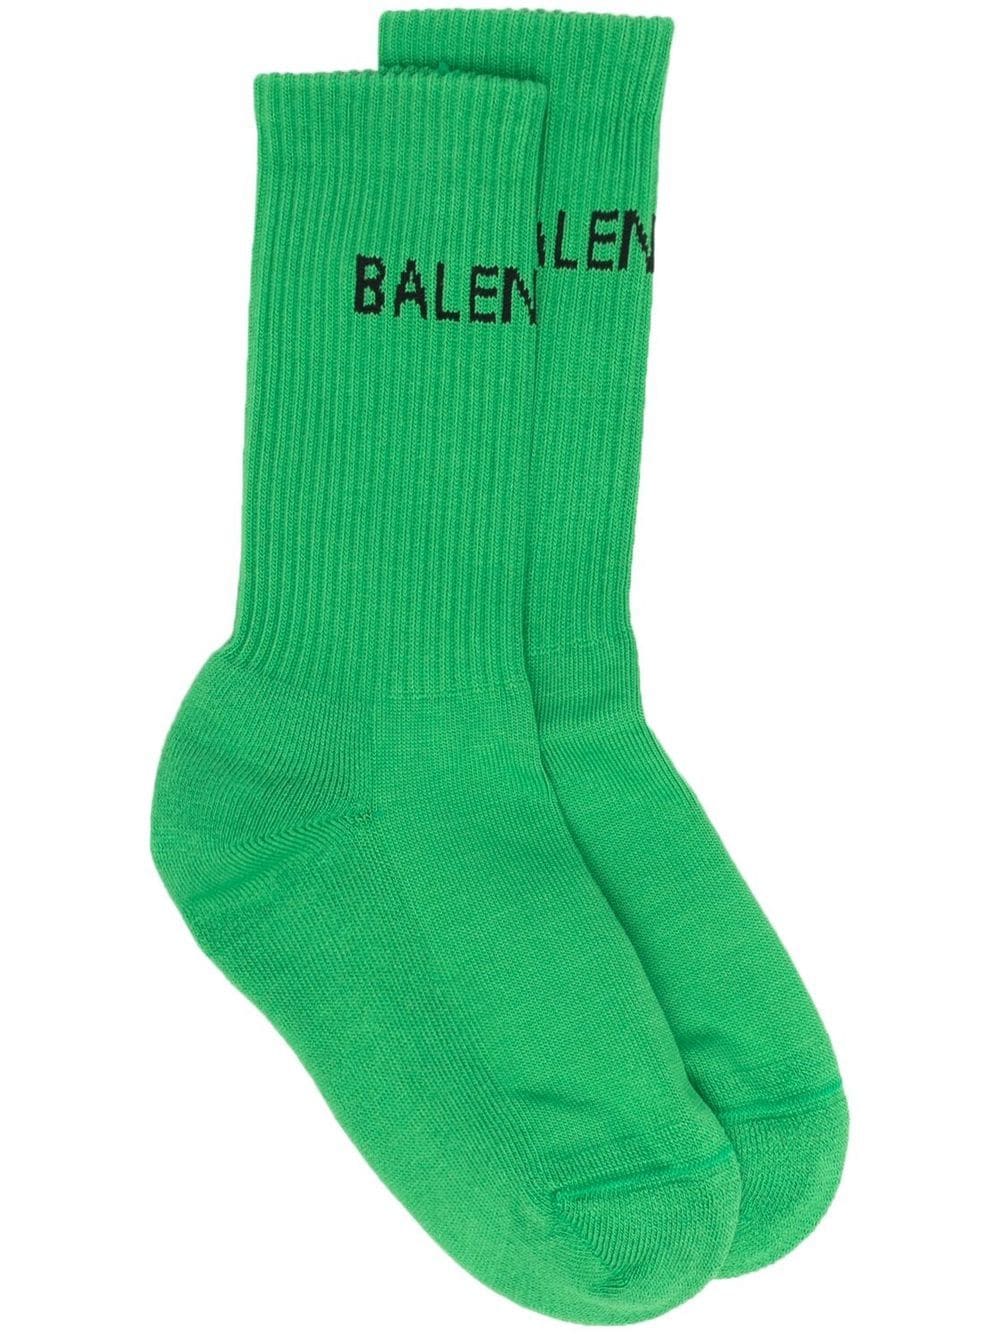 Woman Balenciaga Tennis Socks In Green And Black Cotton